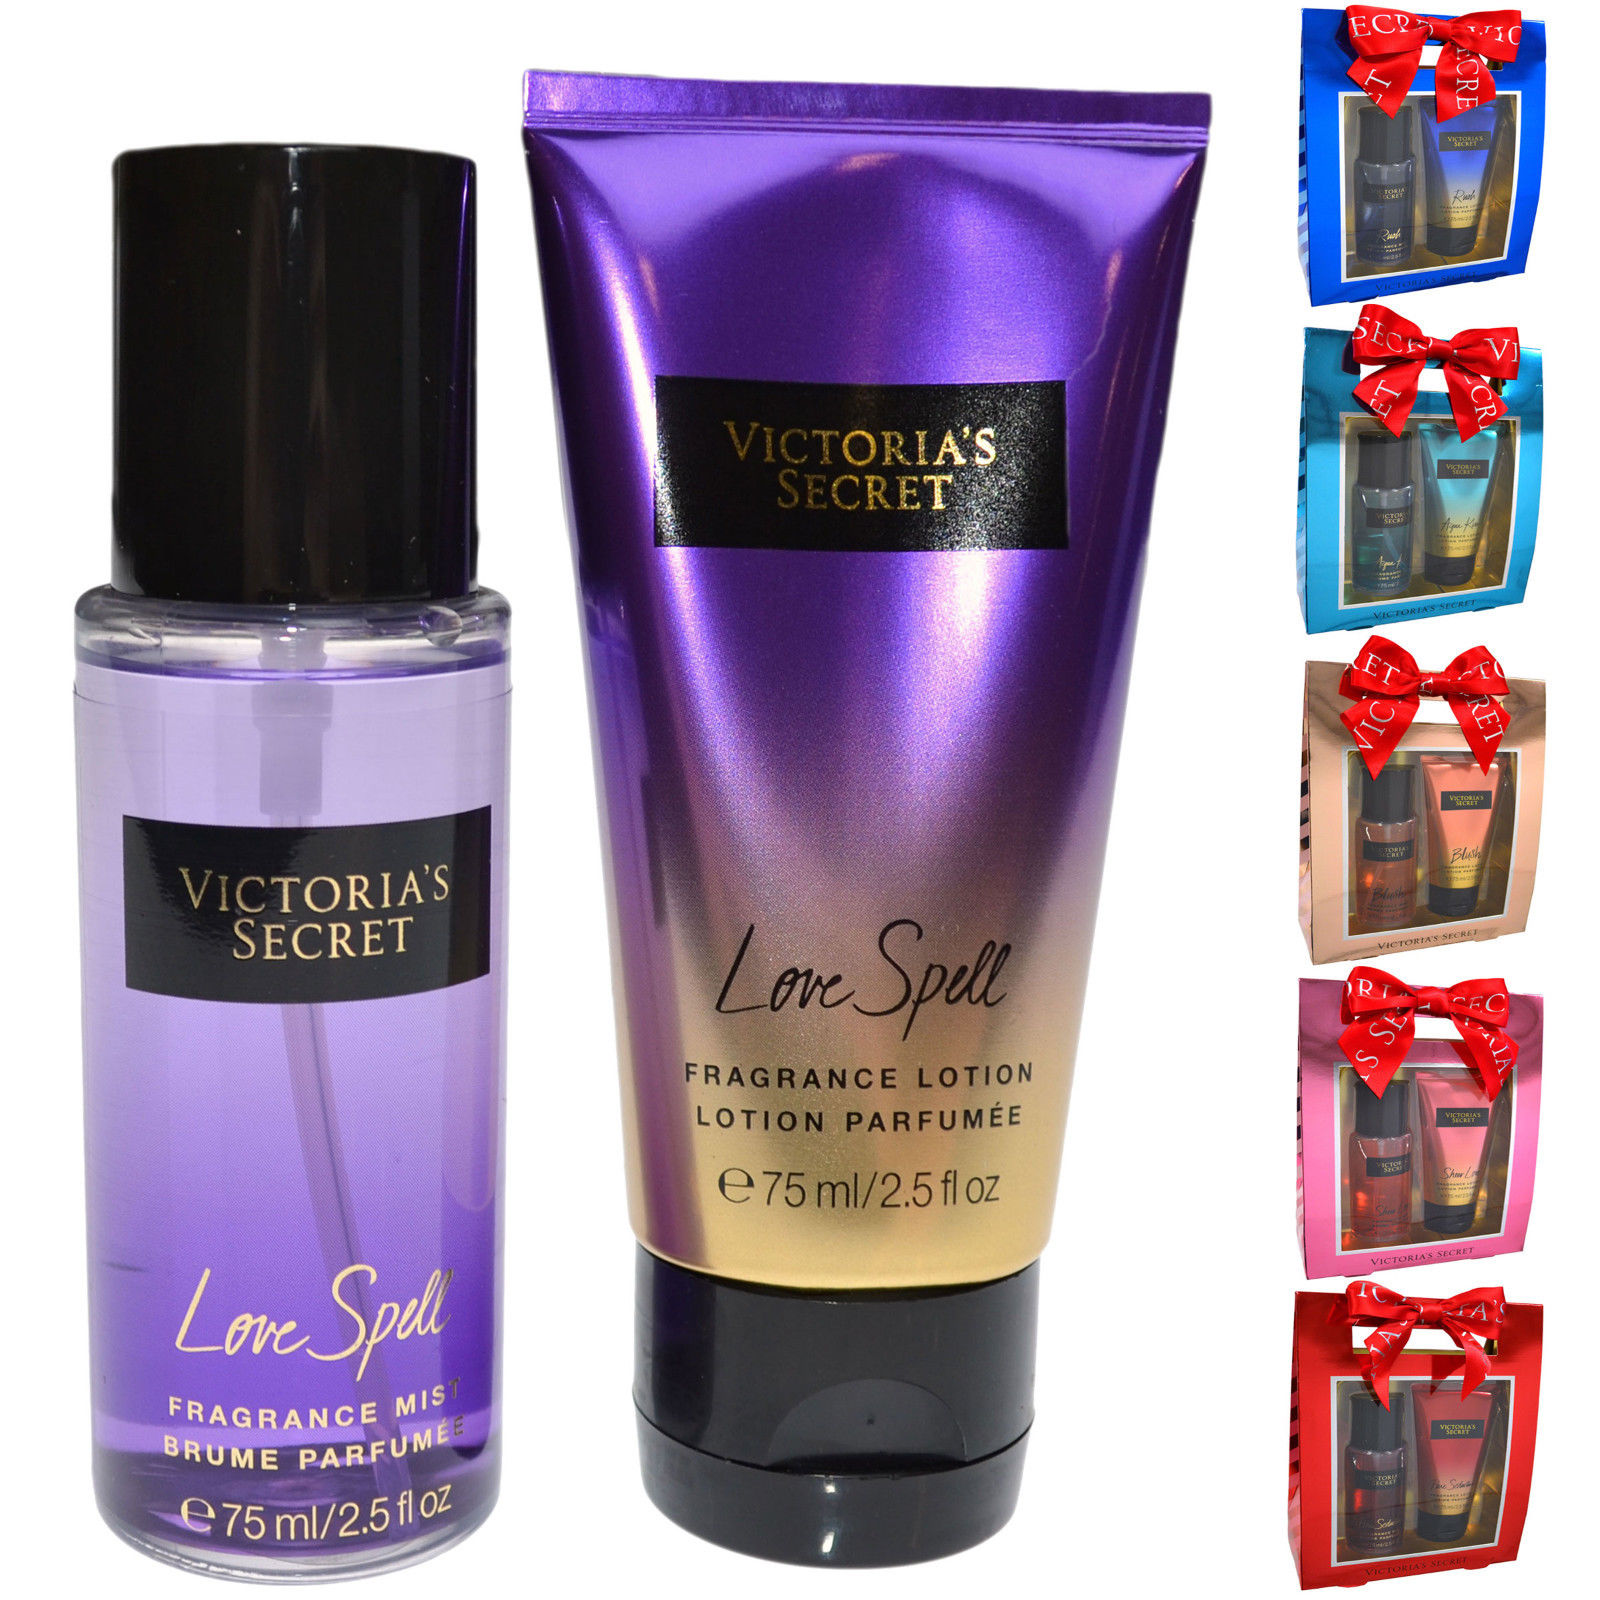 Victoria's Secret Fantasies Gift Set 2 Piece Fragrance